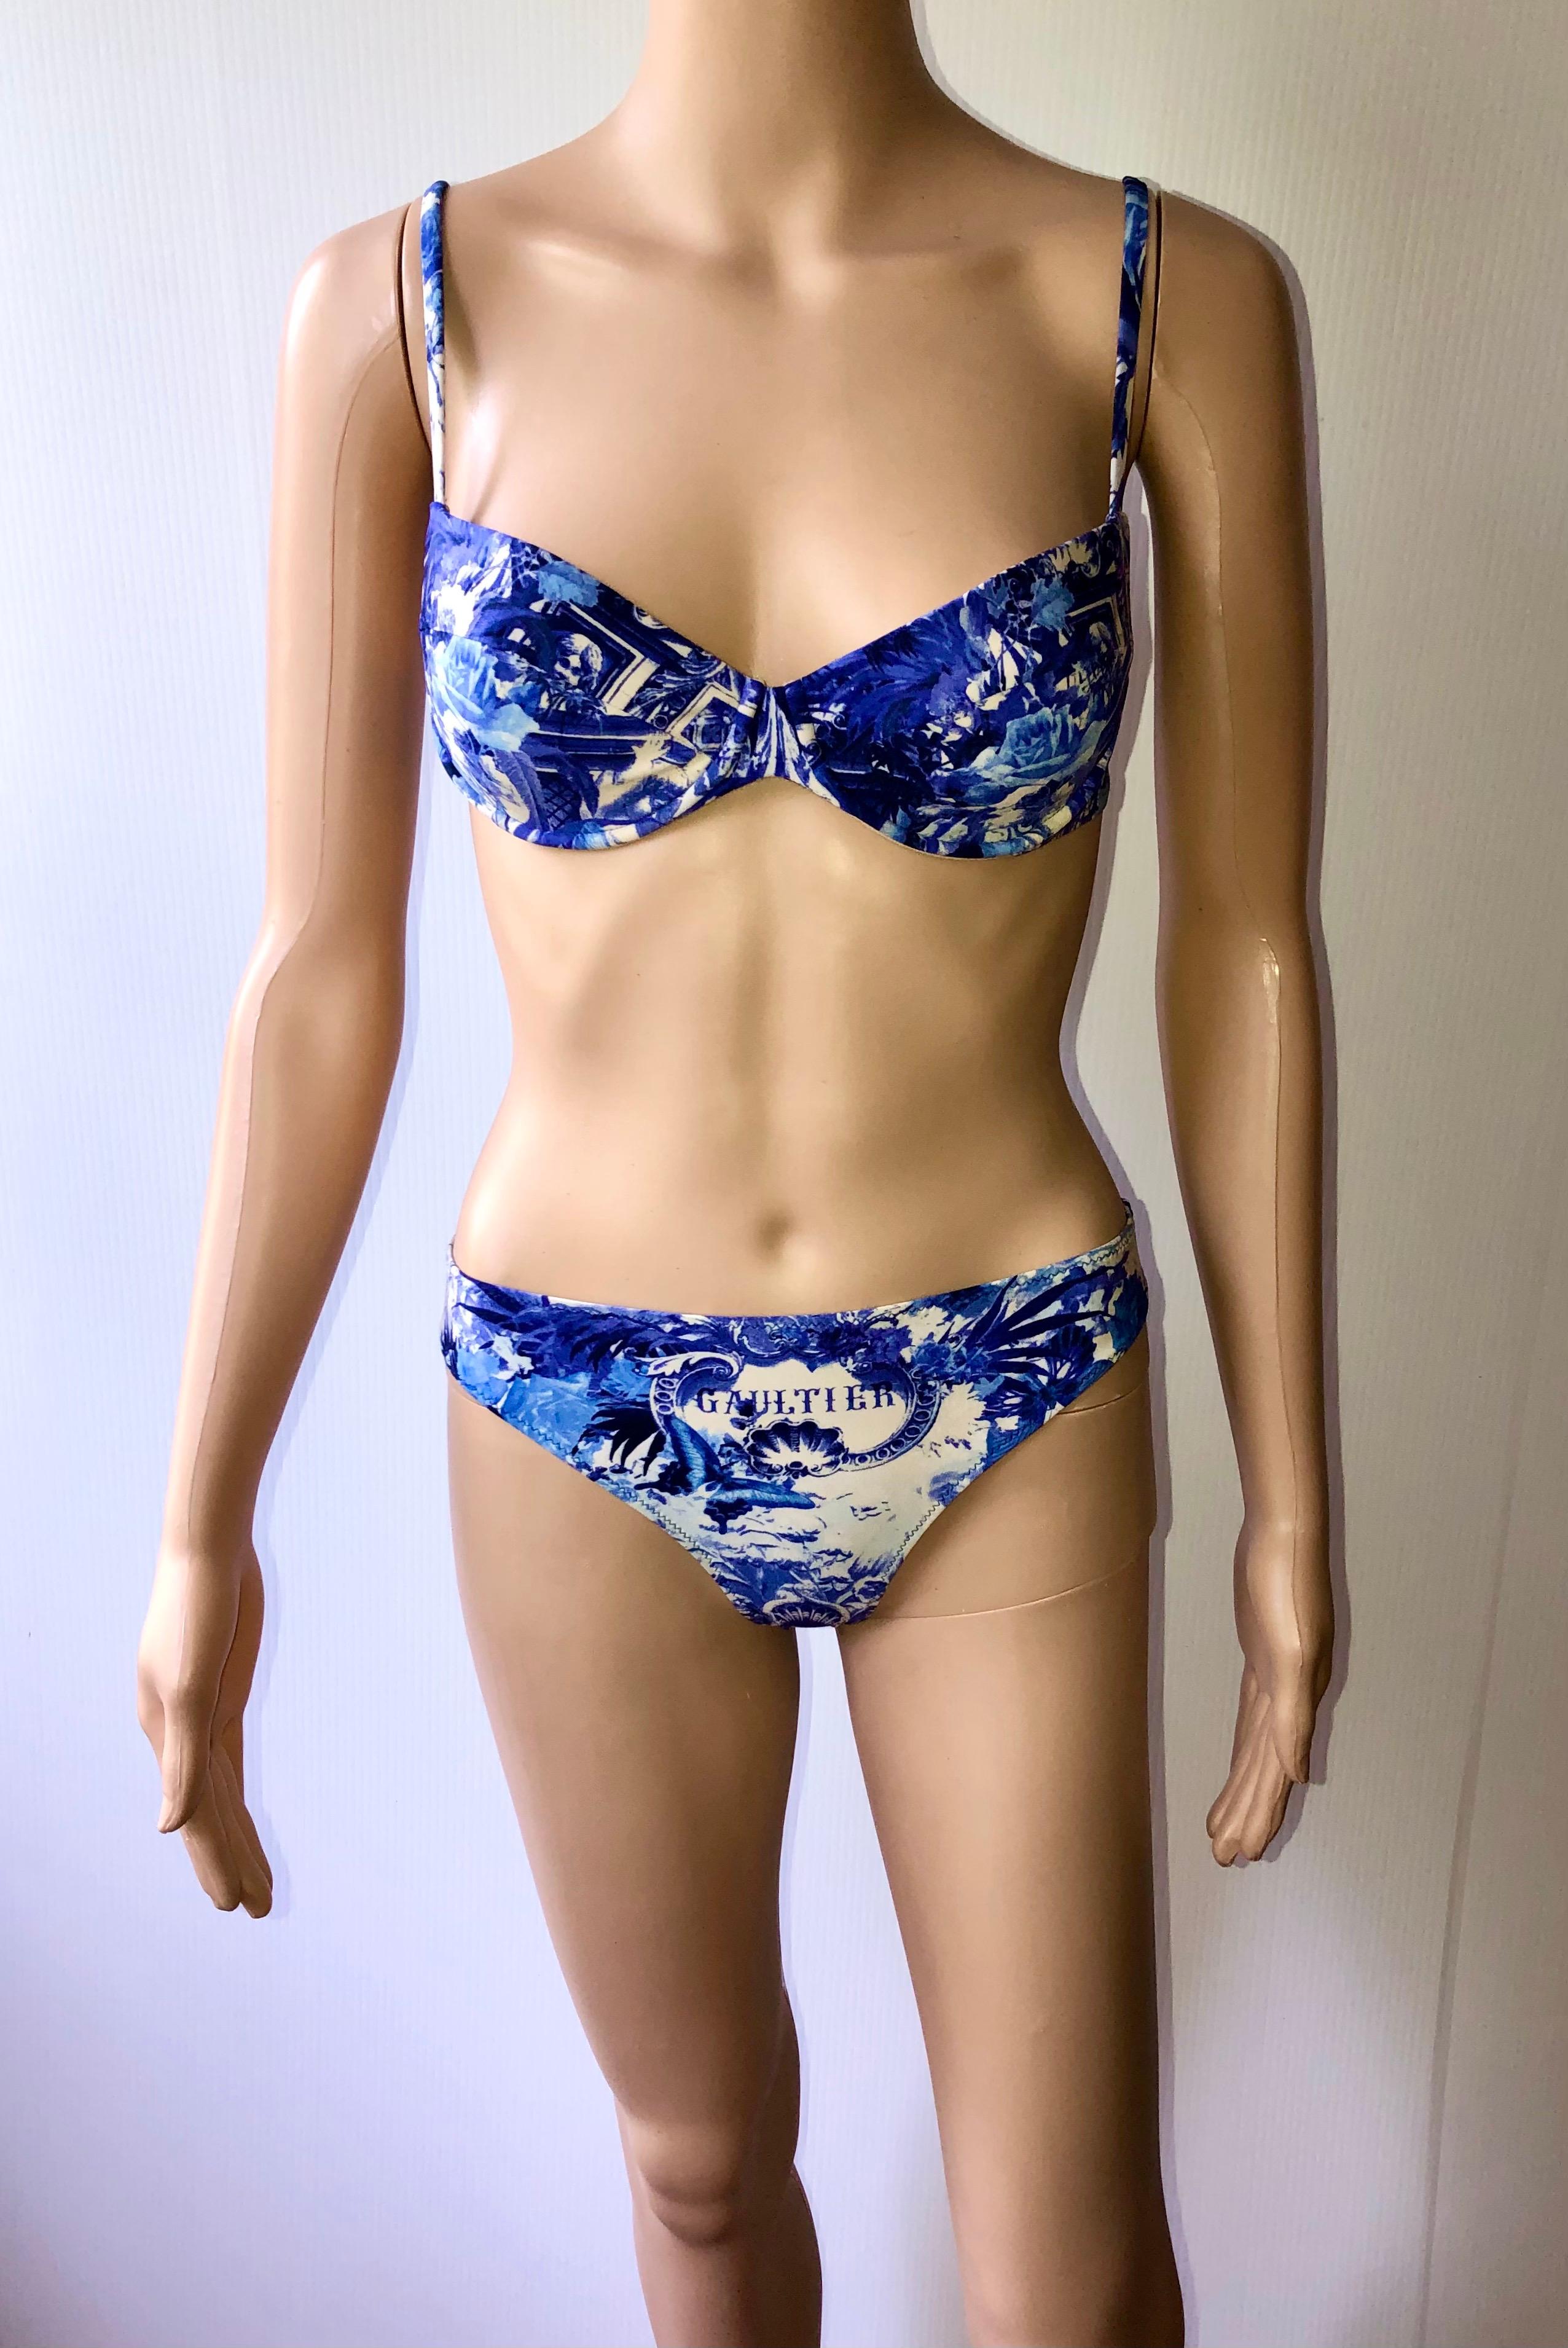 Jean Paul Gaultier Soleil S/S 1999 Flamingo Tropical Print Bikini Swimwear Swimsuit 2 Piece Set IT 42


